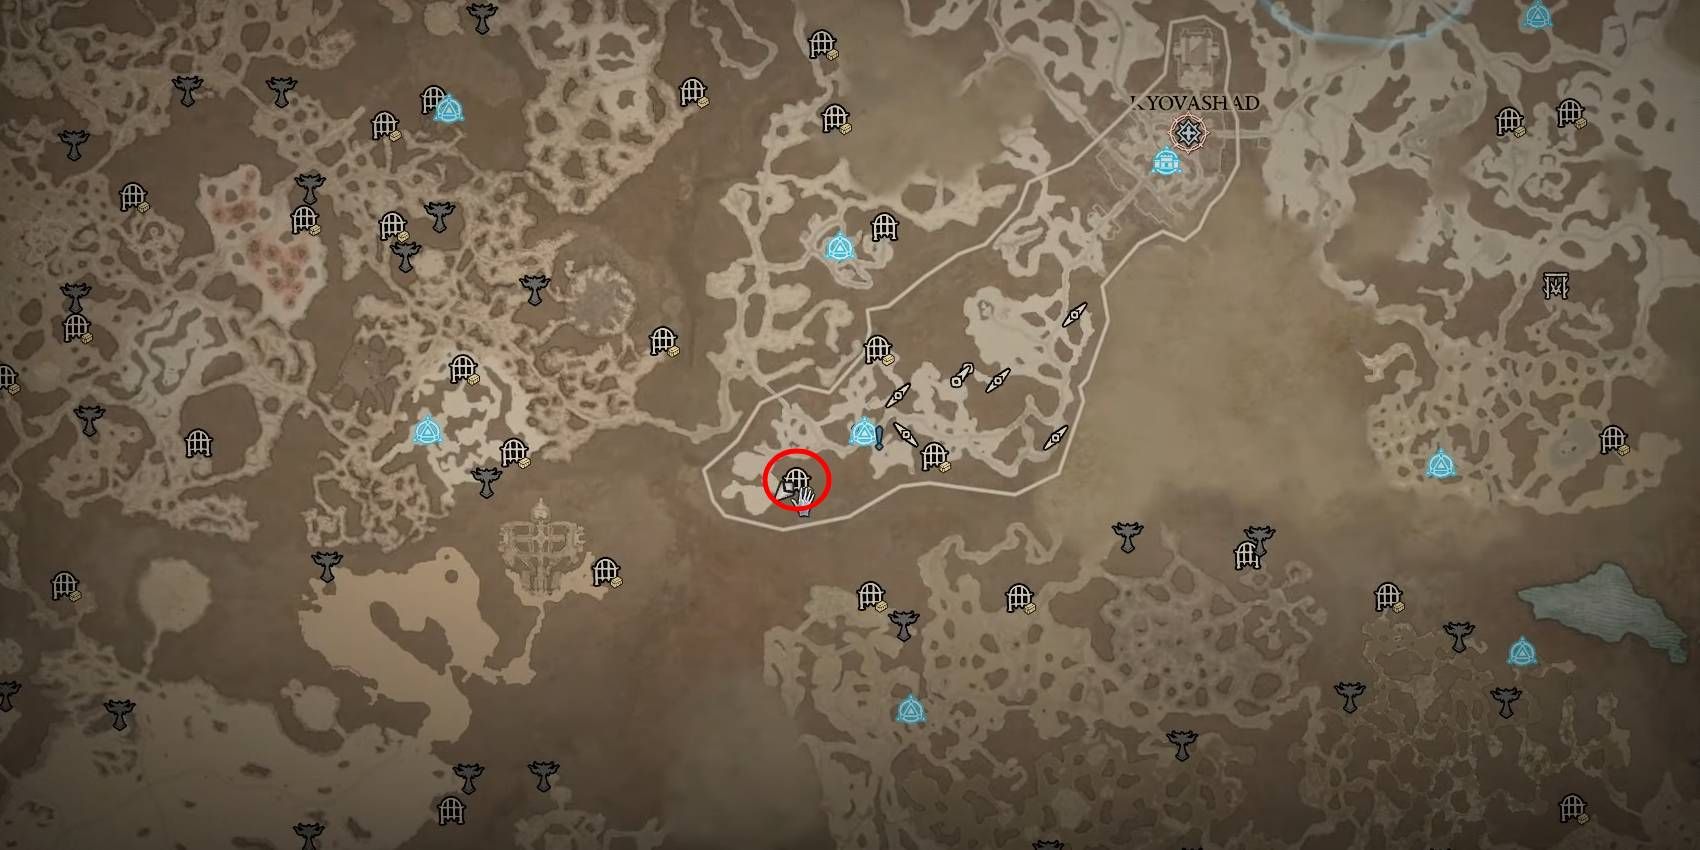 Diablo 4 Lokasi Penjara Arsip yang Hilang di Peta Ditandai dengan Lingkaran Merah